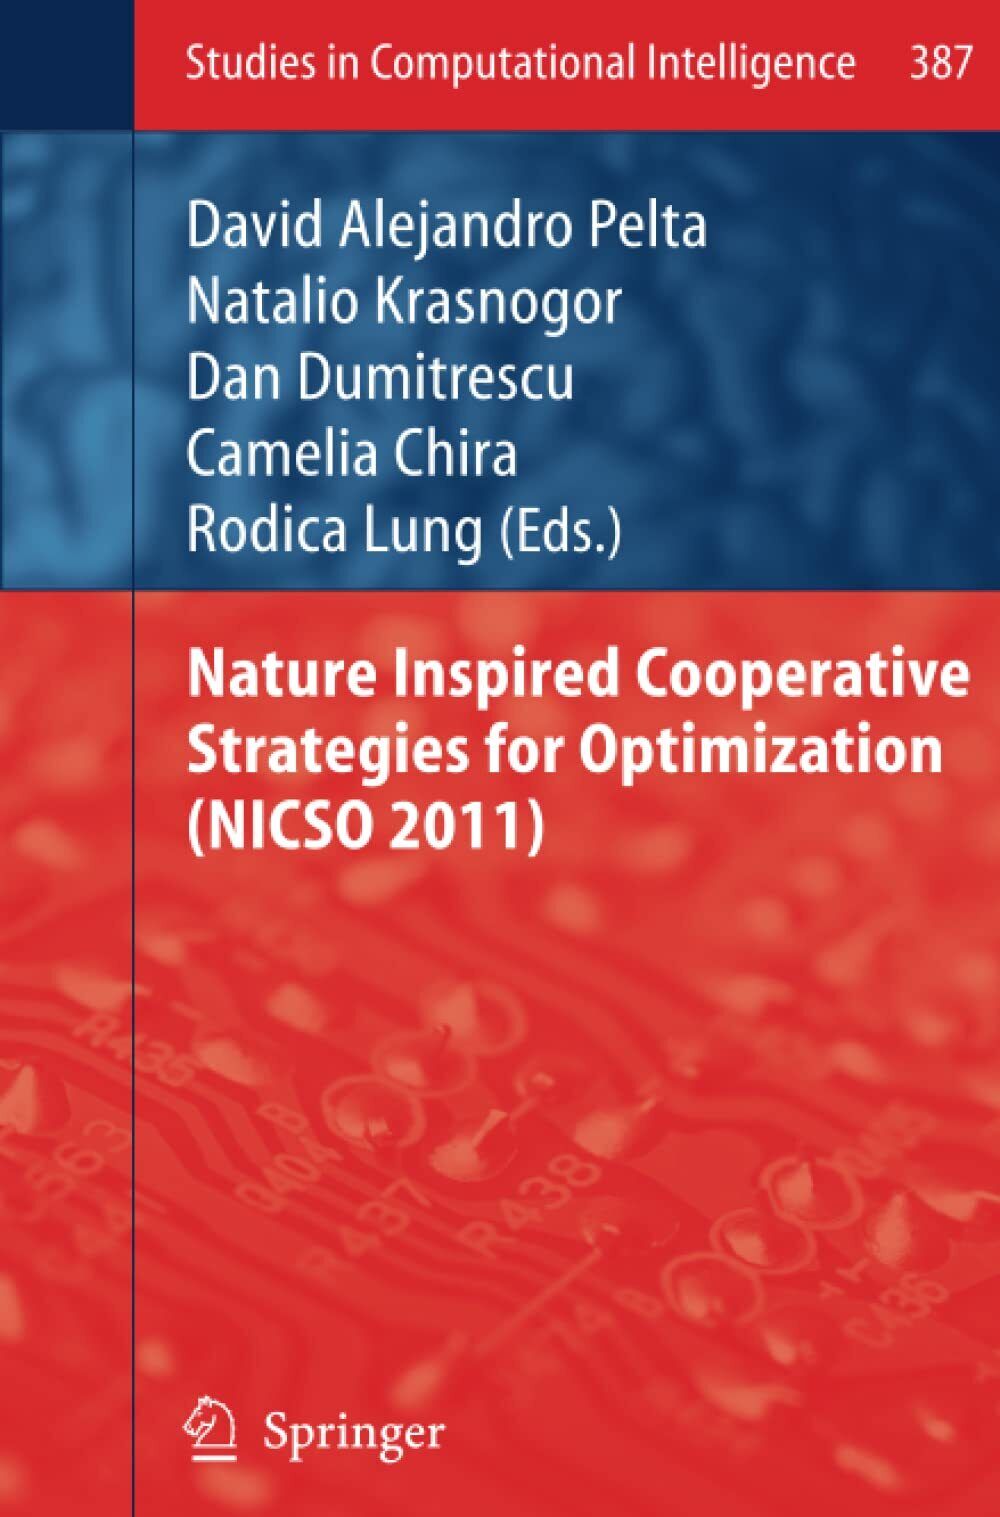 Nature Inspired Cooperative Strategies for Optimization (NICSO 2011) - 2013